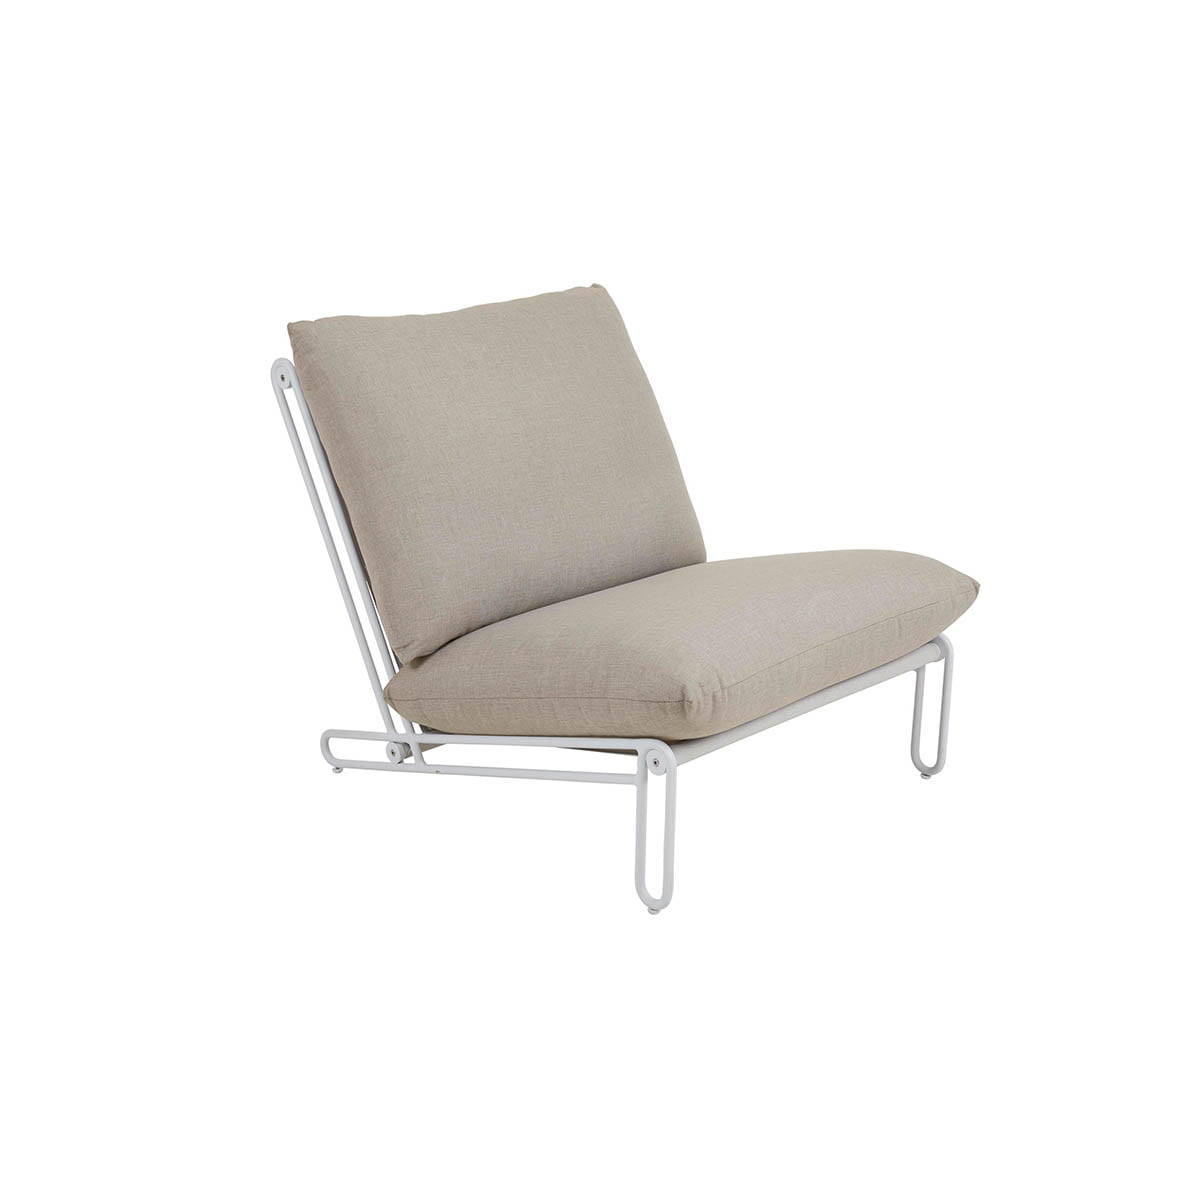 Moderne, byggbar sofa/stol i loungestil med aluminiumsstamme og sete i textilene